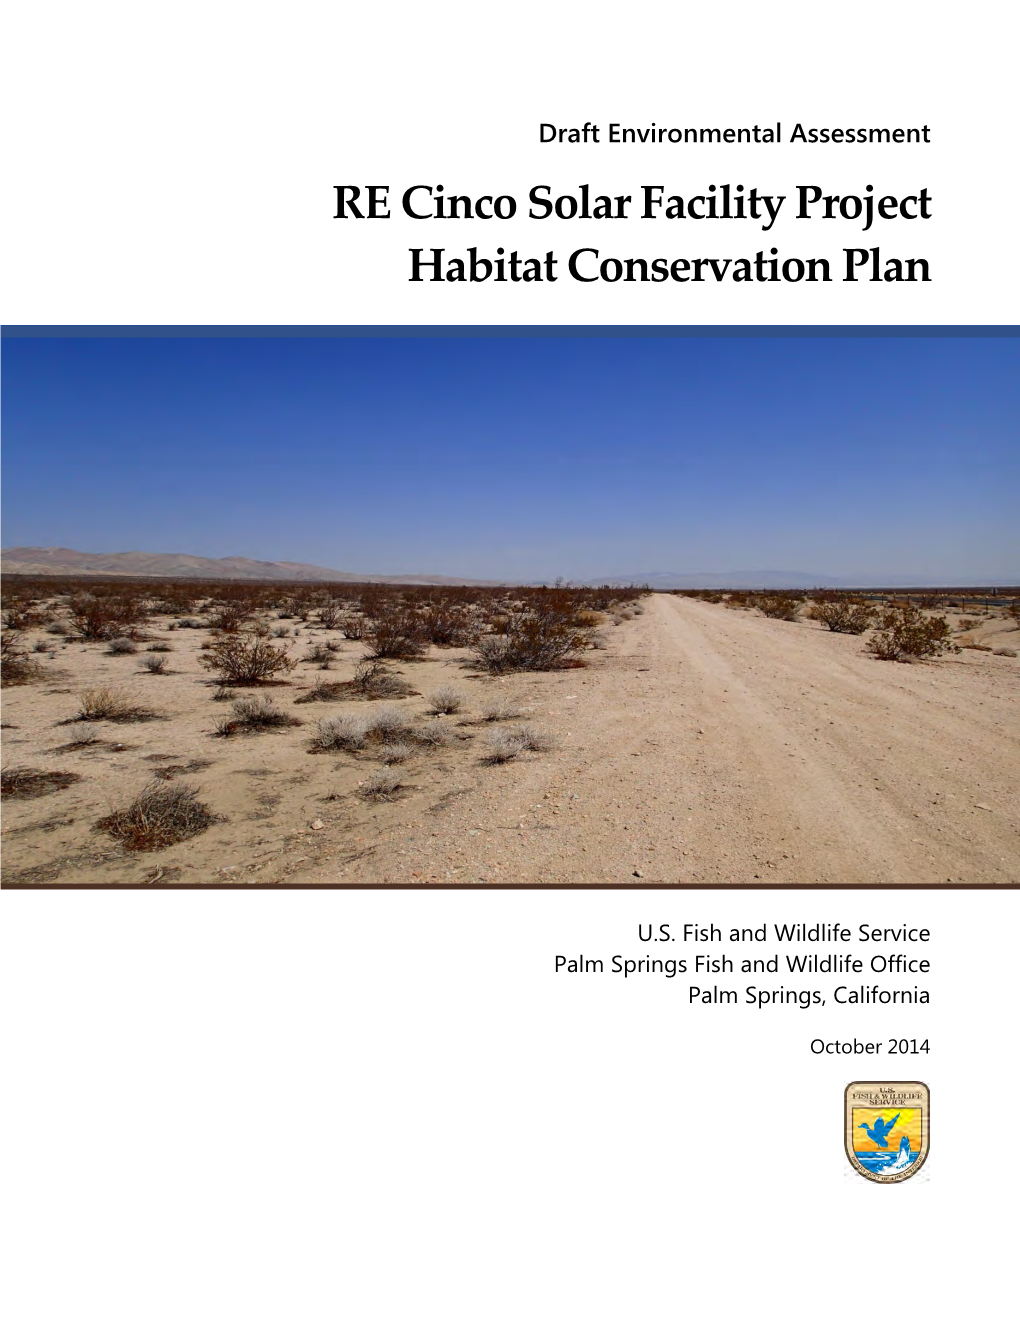 RE Cinco Solar Facility Project Habitat Conservation Plan